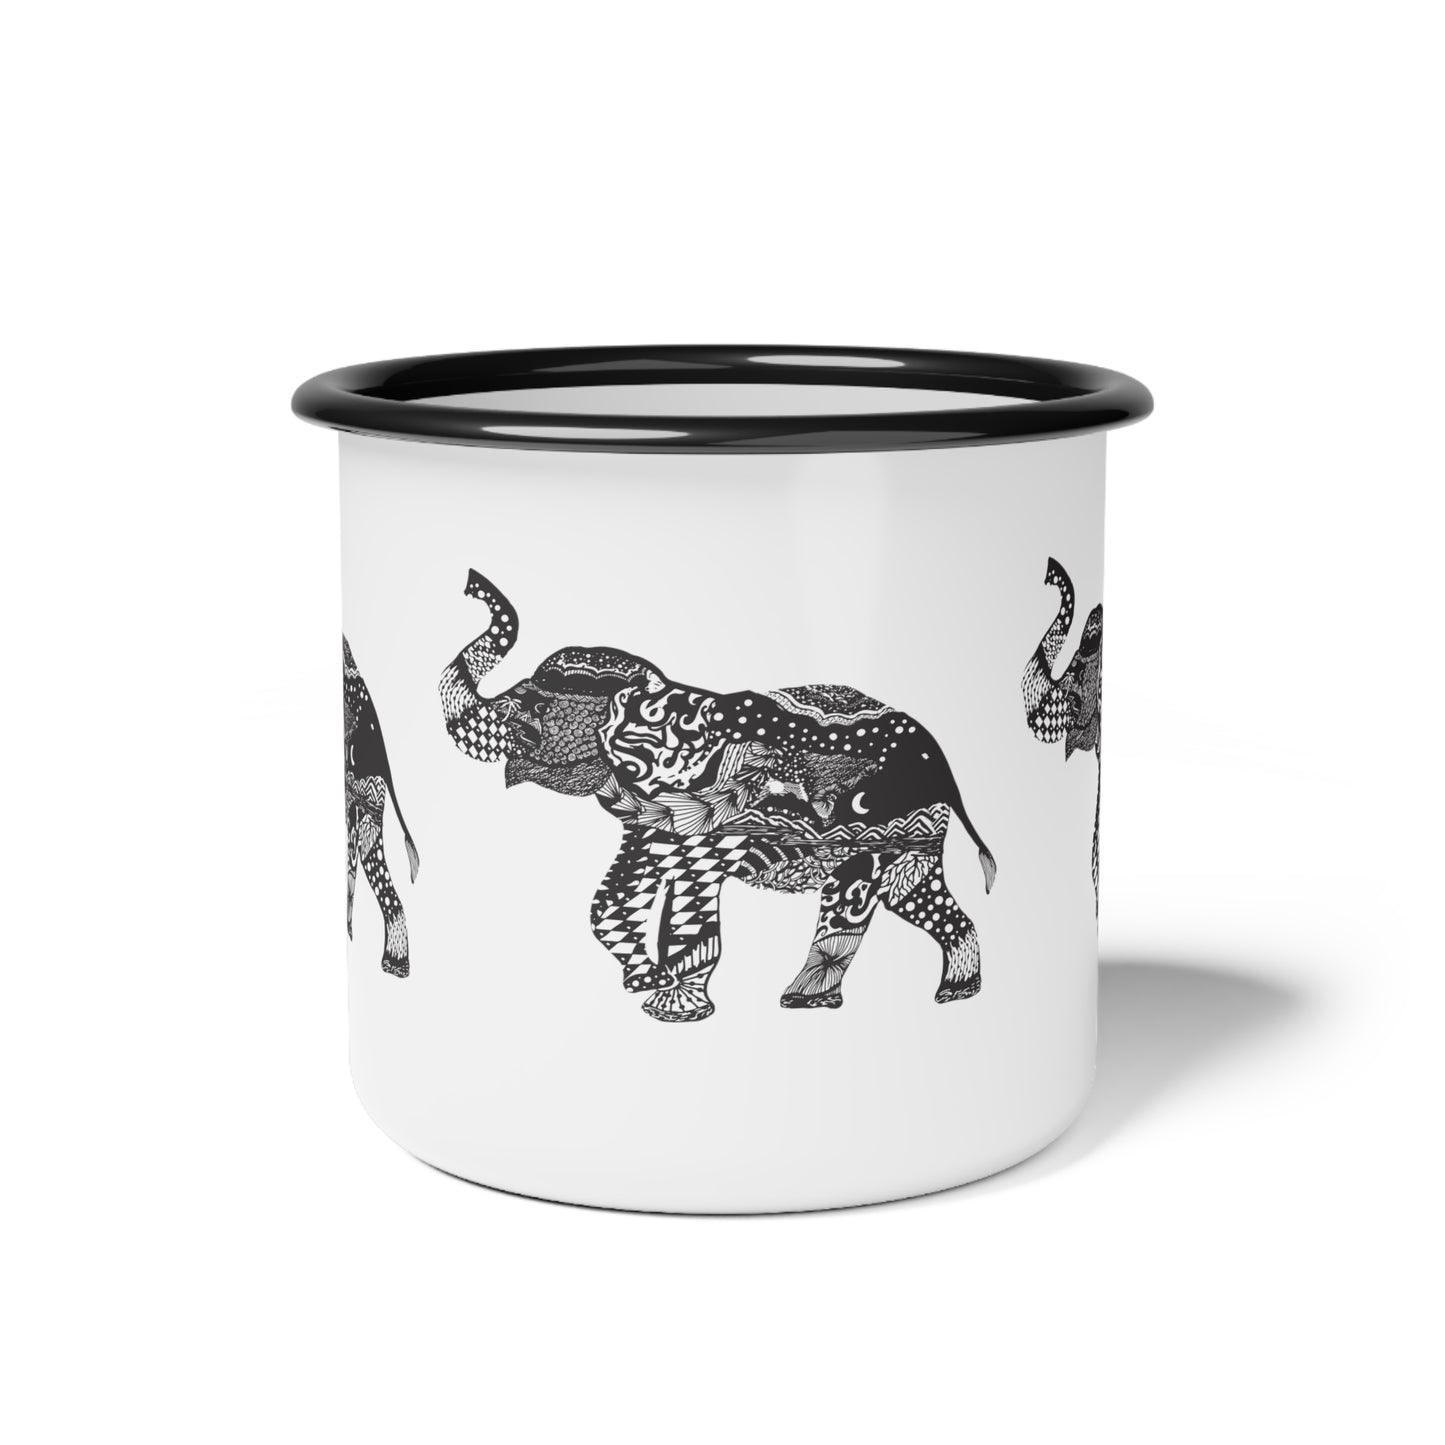 Elephant Enamel Camp Cup with Black rim